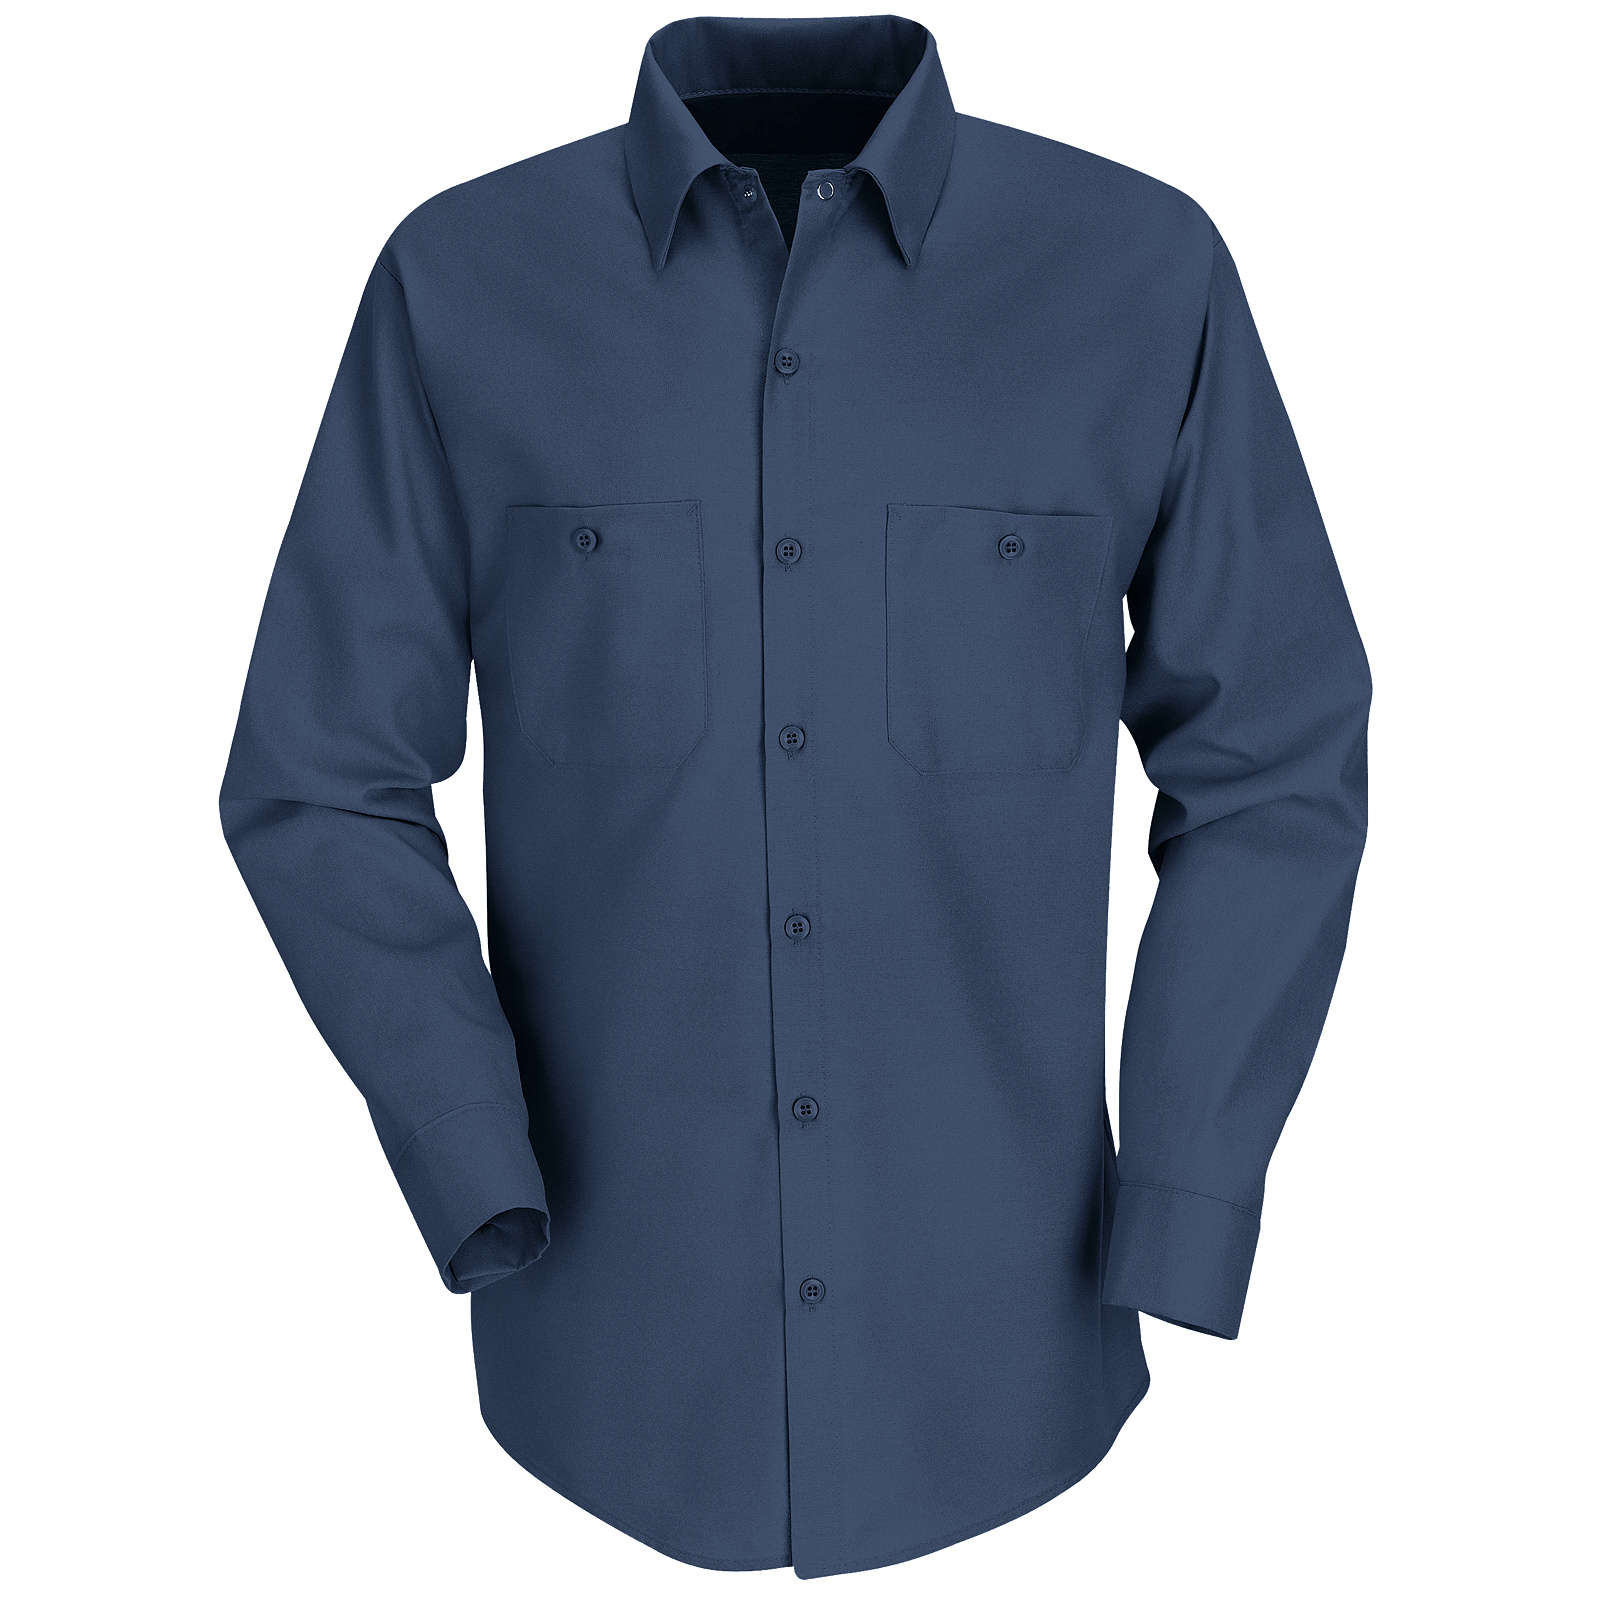 Men's Long-Sleeve Industrial Work Shirt